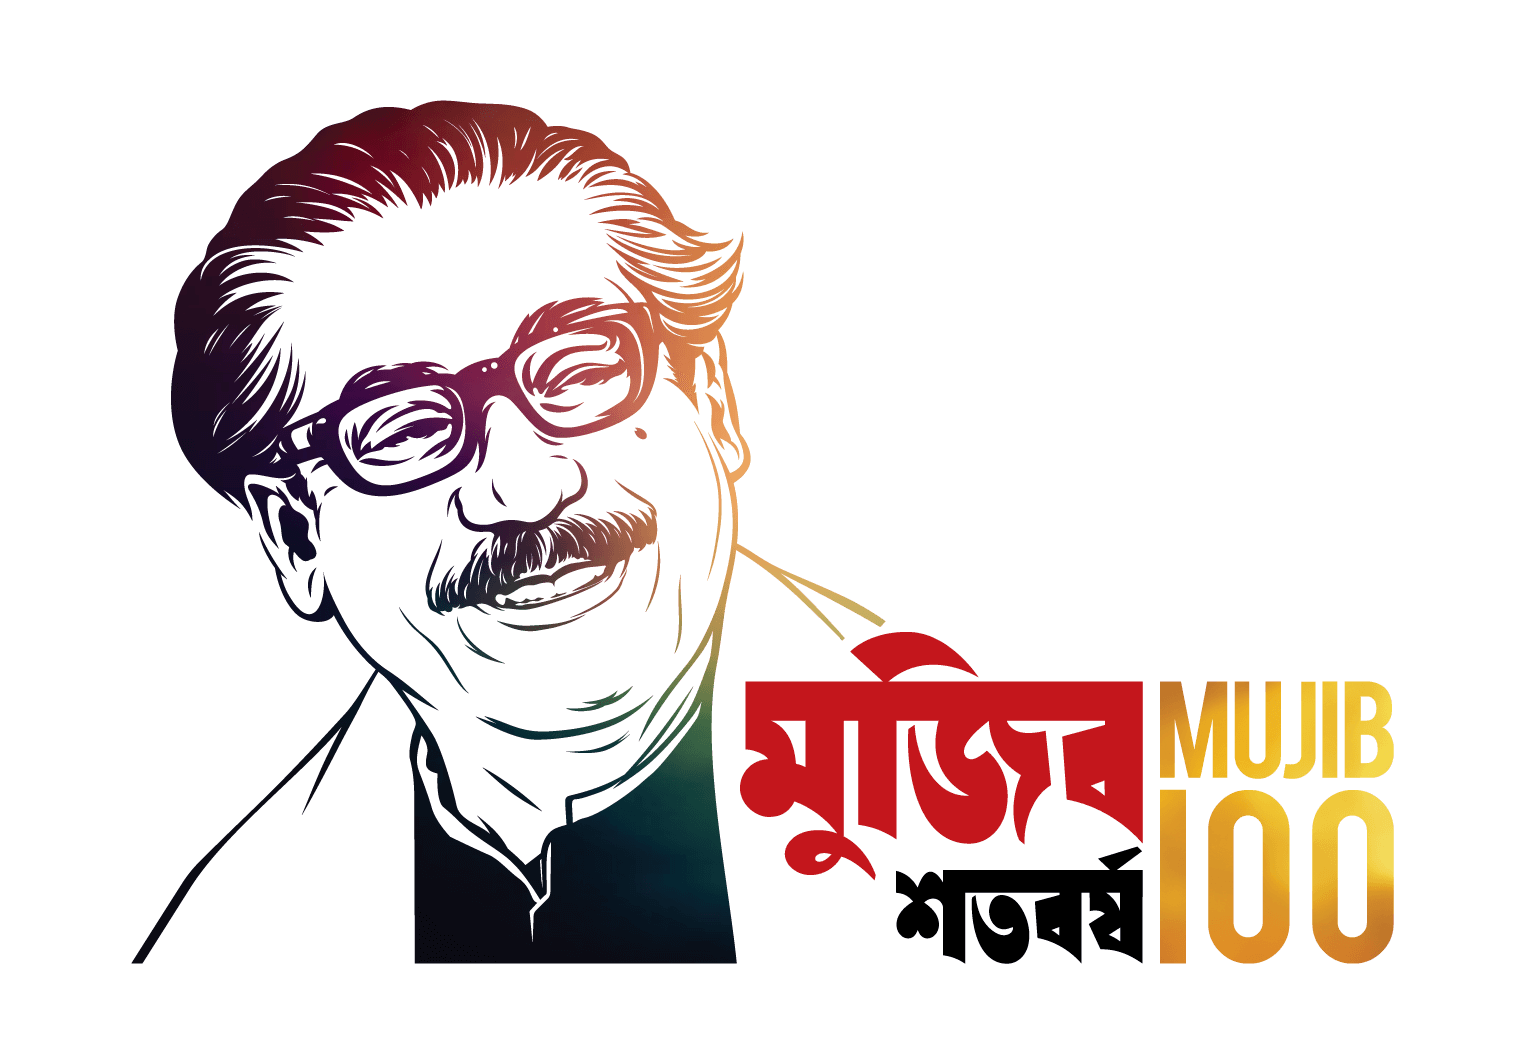 100 years of mujib